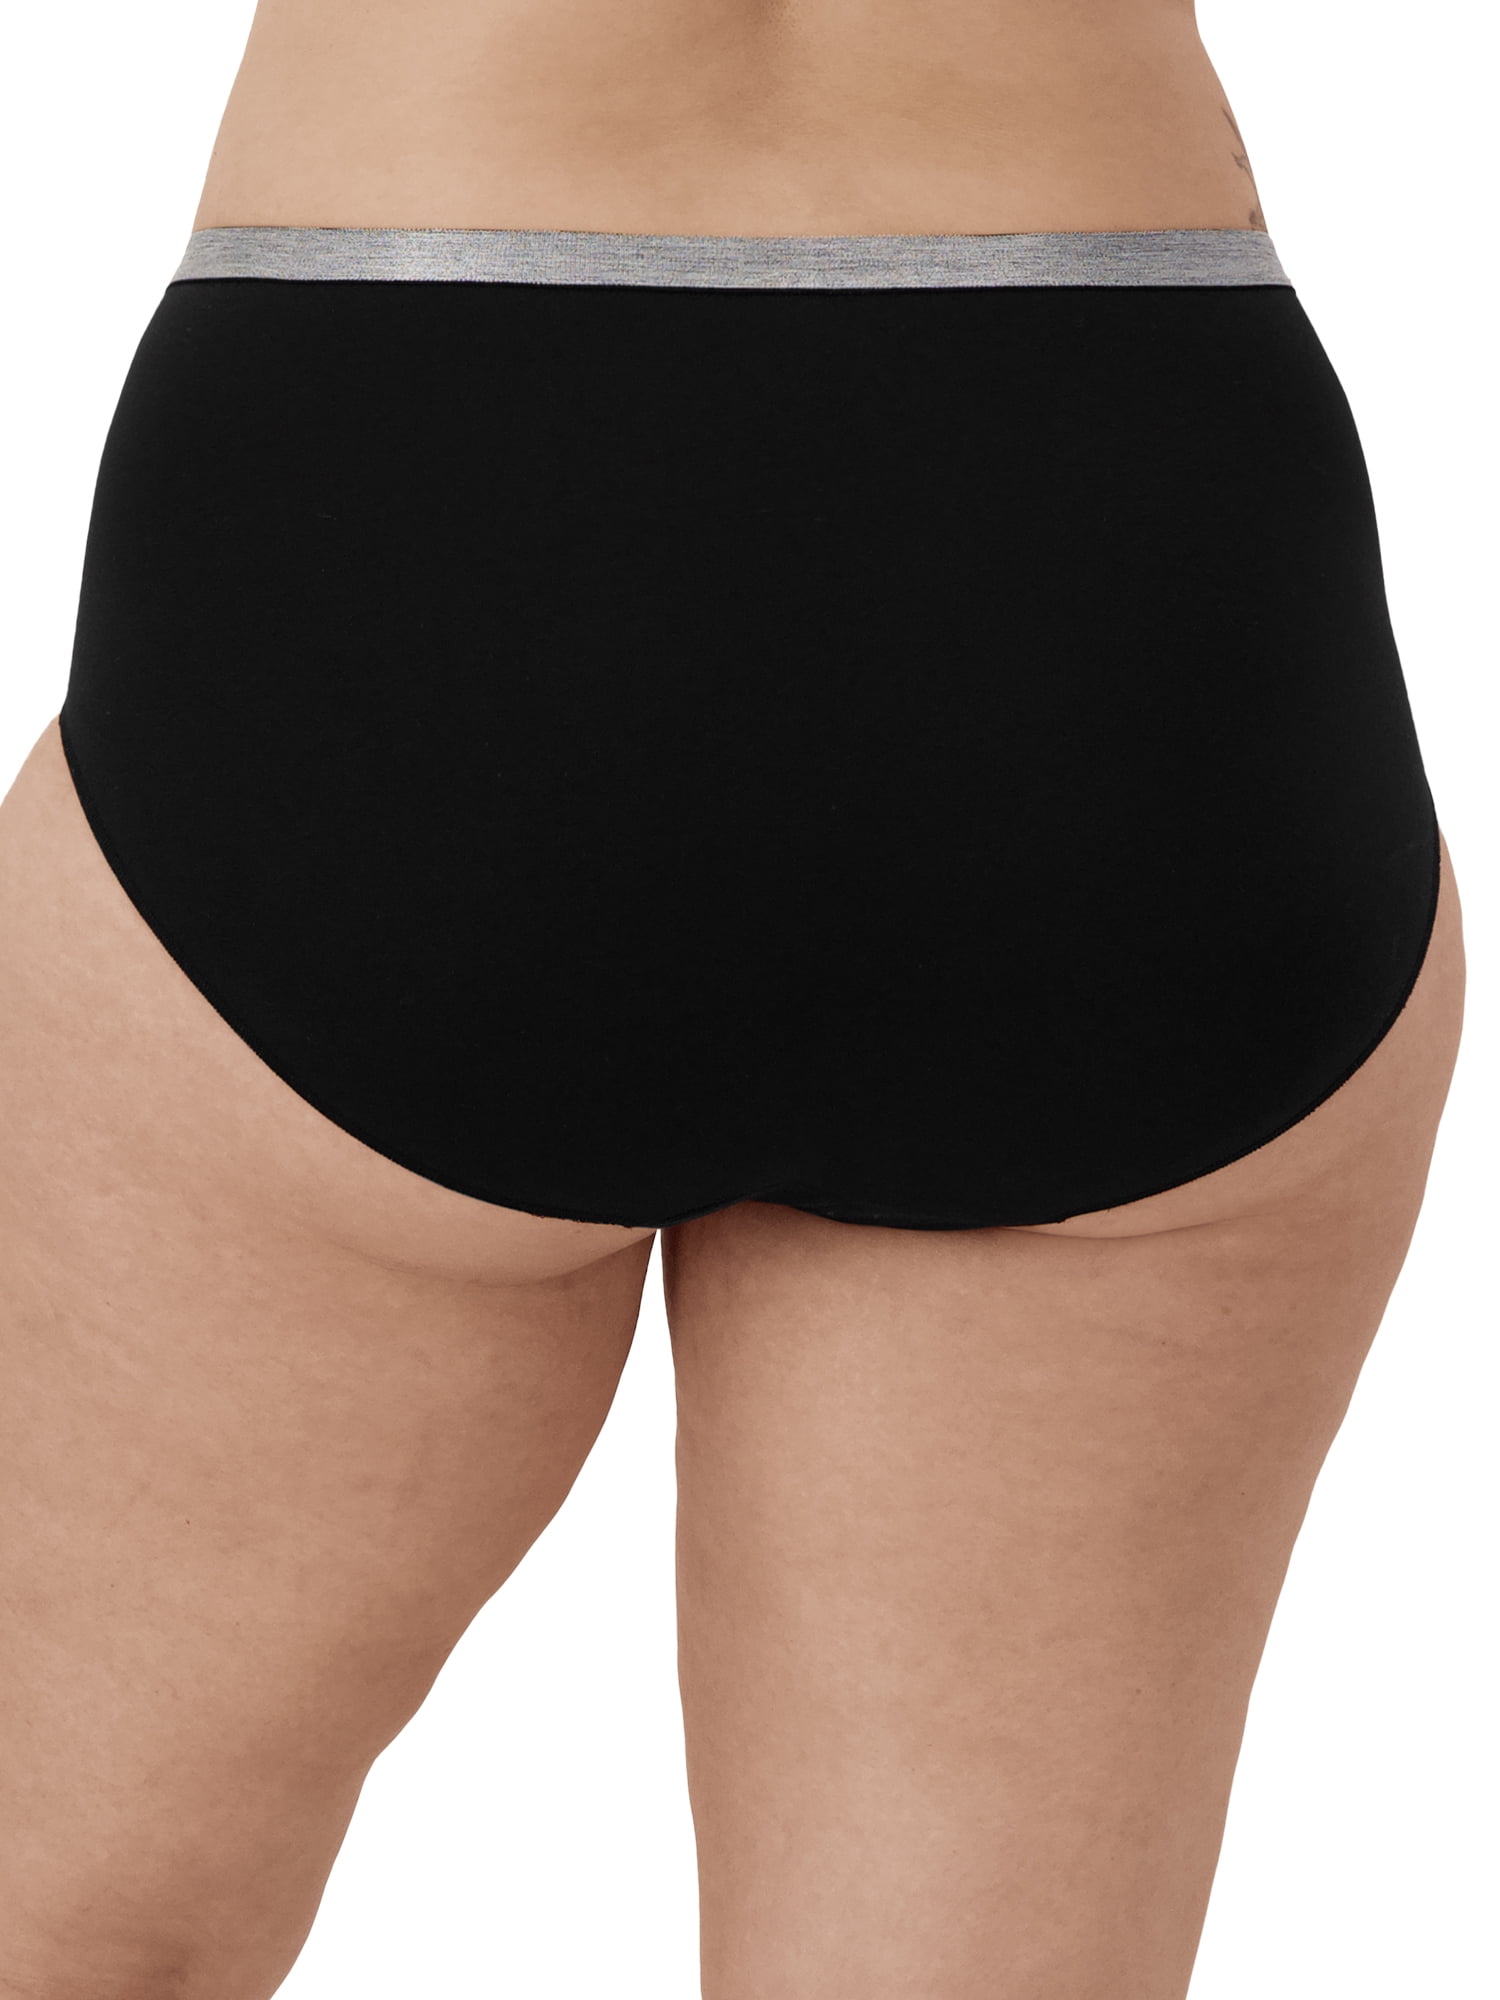 Hanes Women's Size 7 Large Panties Black Briefs Stretch Textured